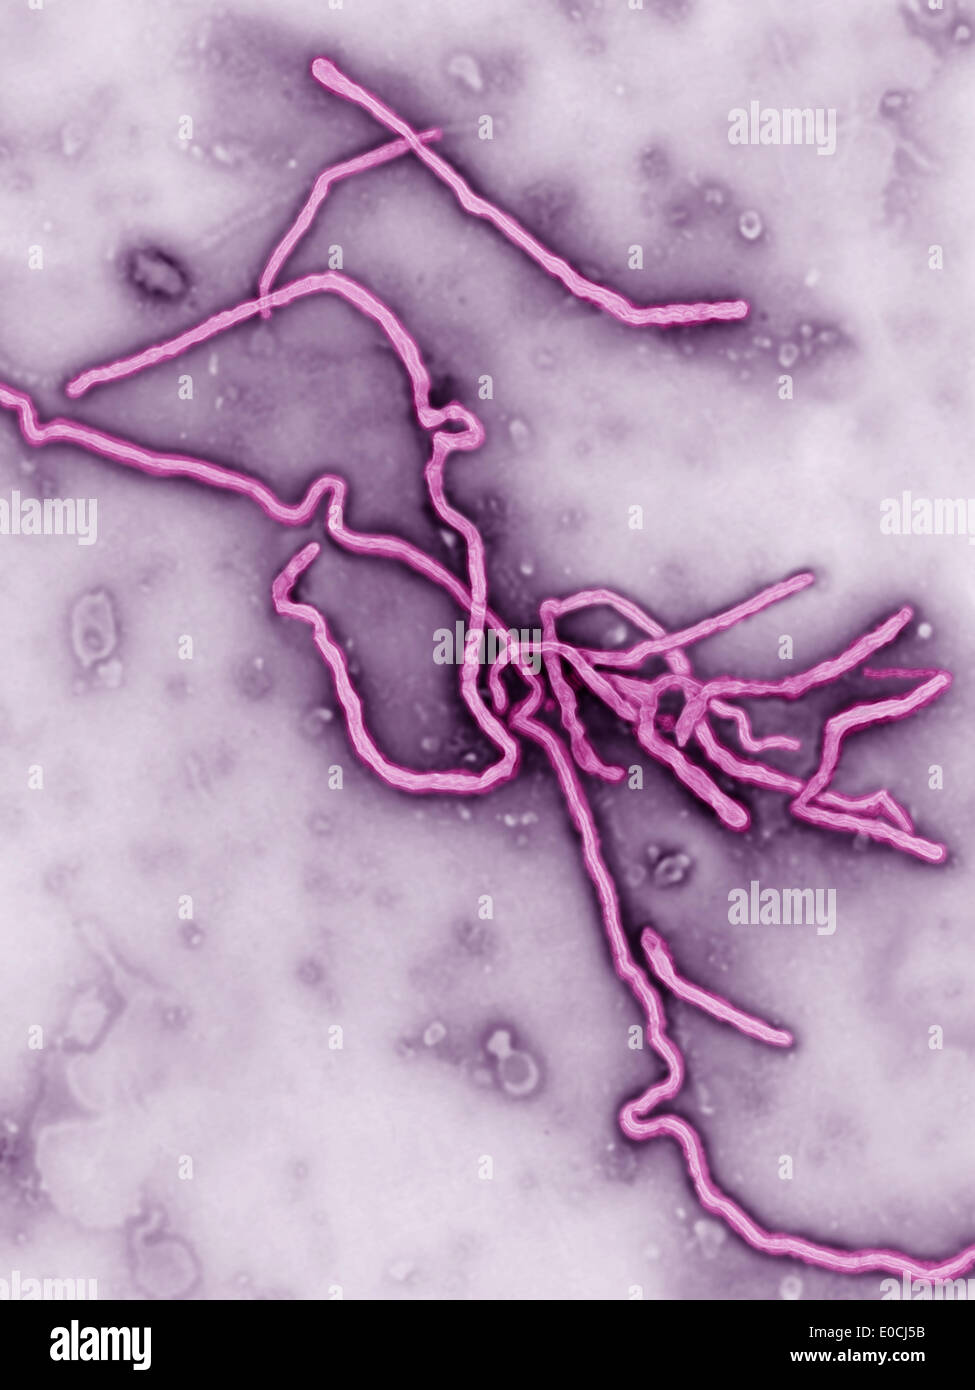 Ebola virus Stock Photo